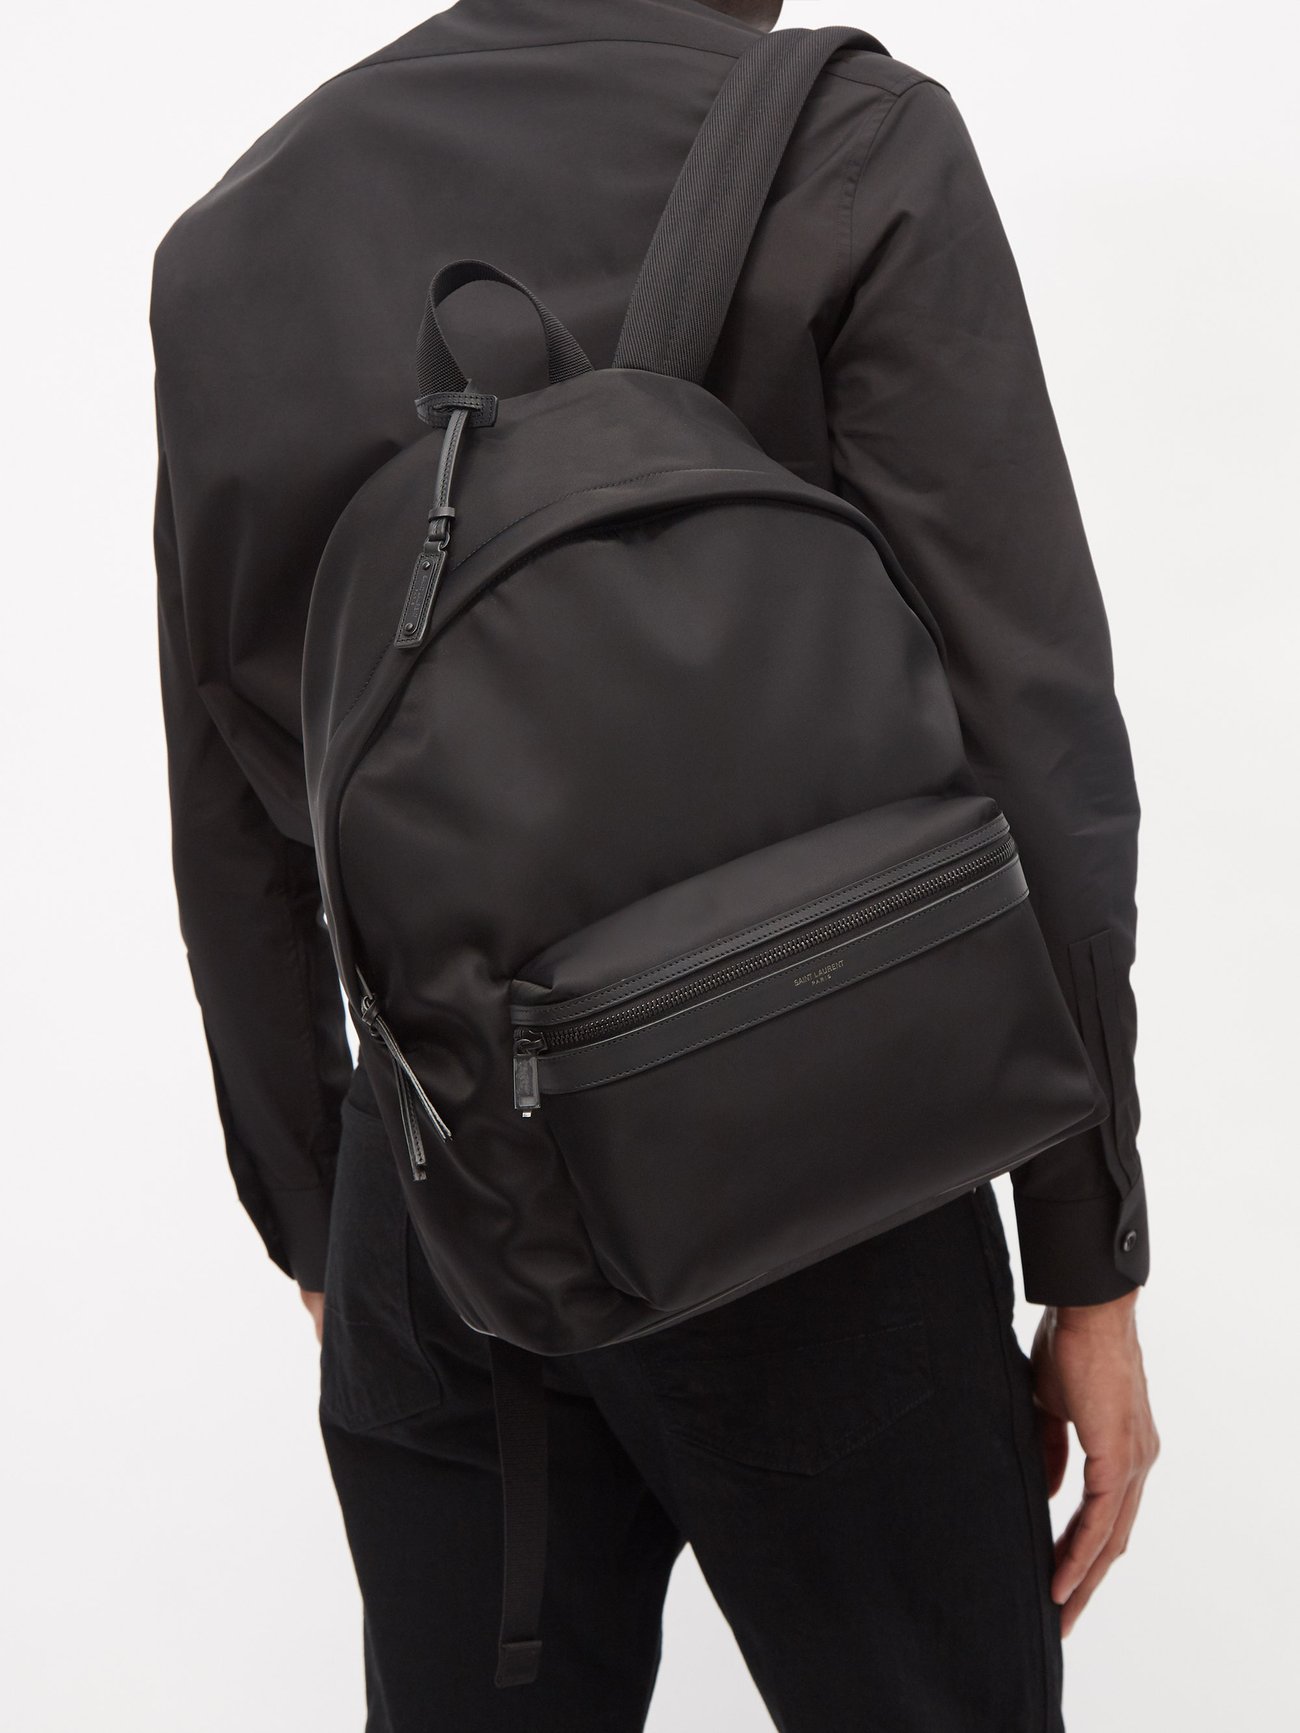 Saint Laurent City Canvas Backpack Palm Print Black/Multi in Nylon